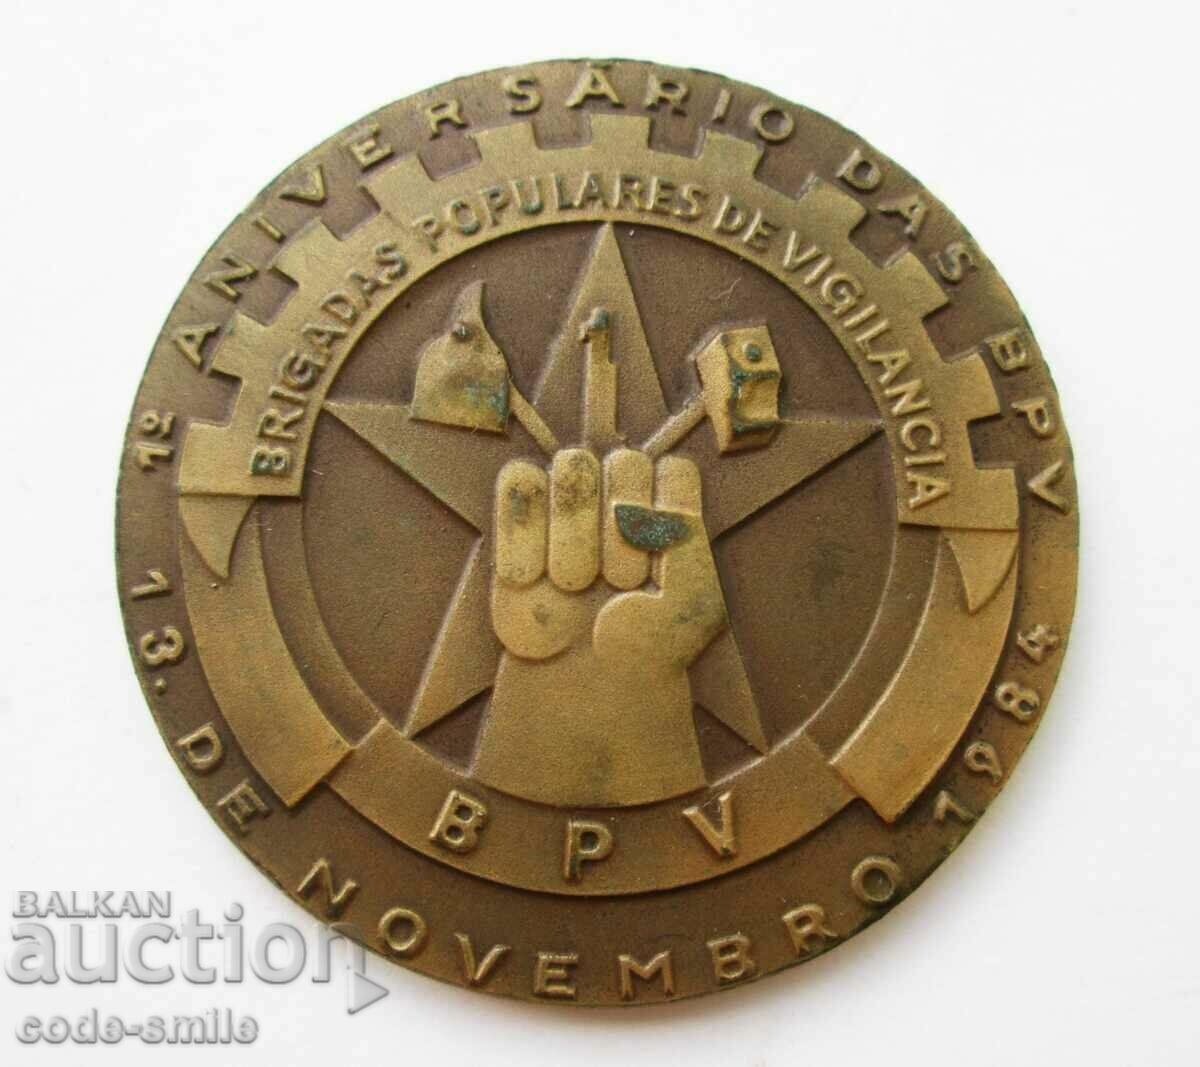 Rare old medal plaque paramilitary militia in Angola